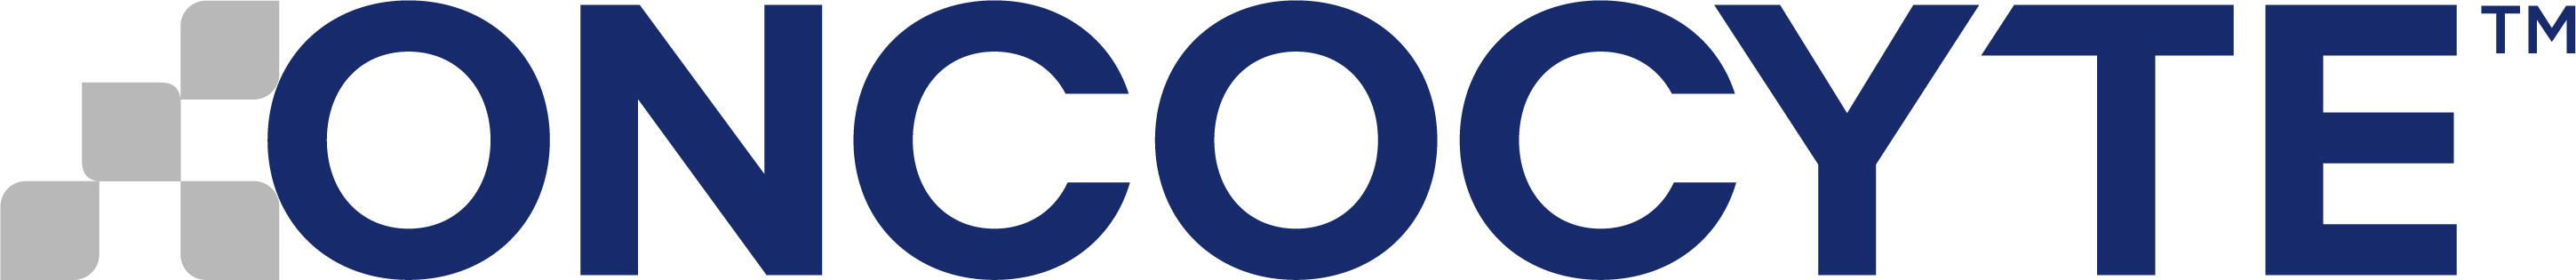 Oncocyte_Logo_Horizontal_Main.jpg